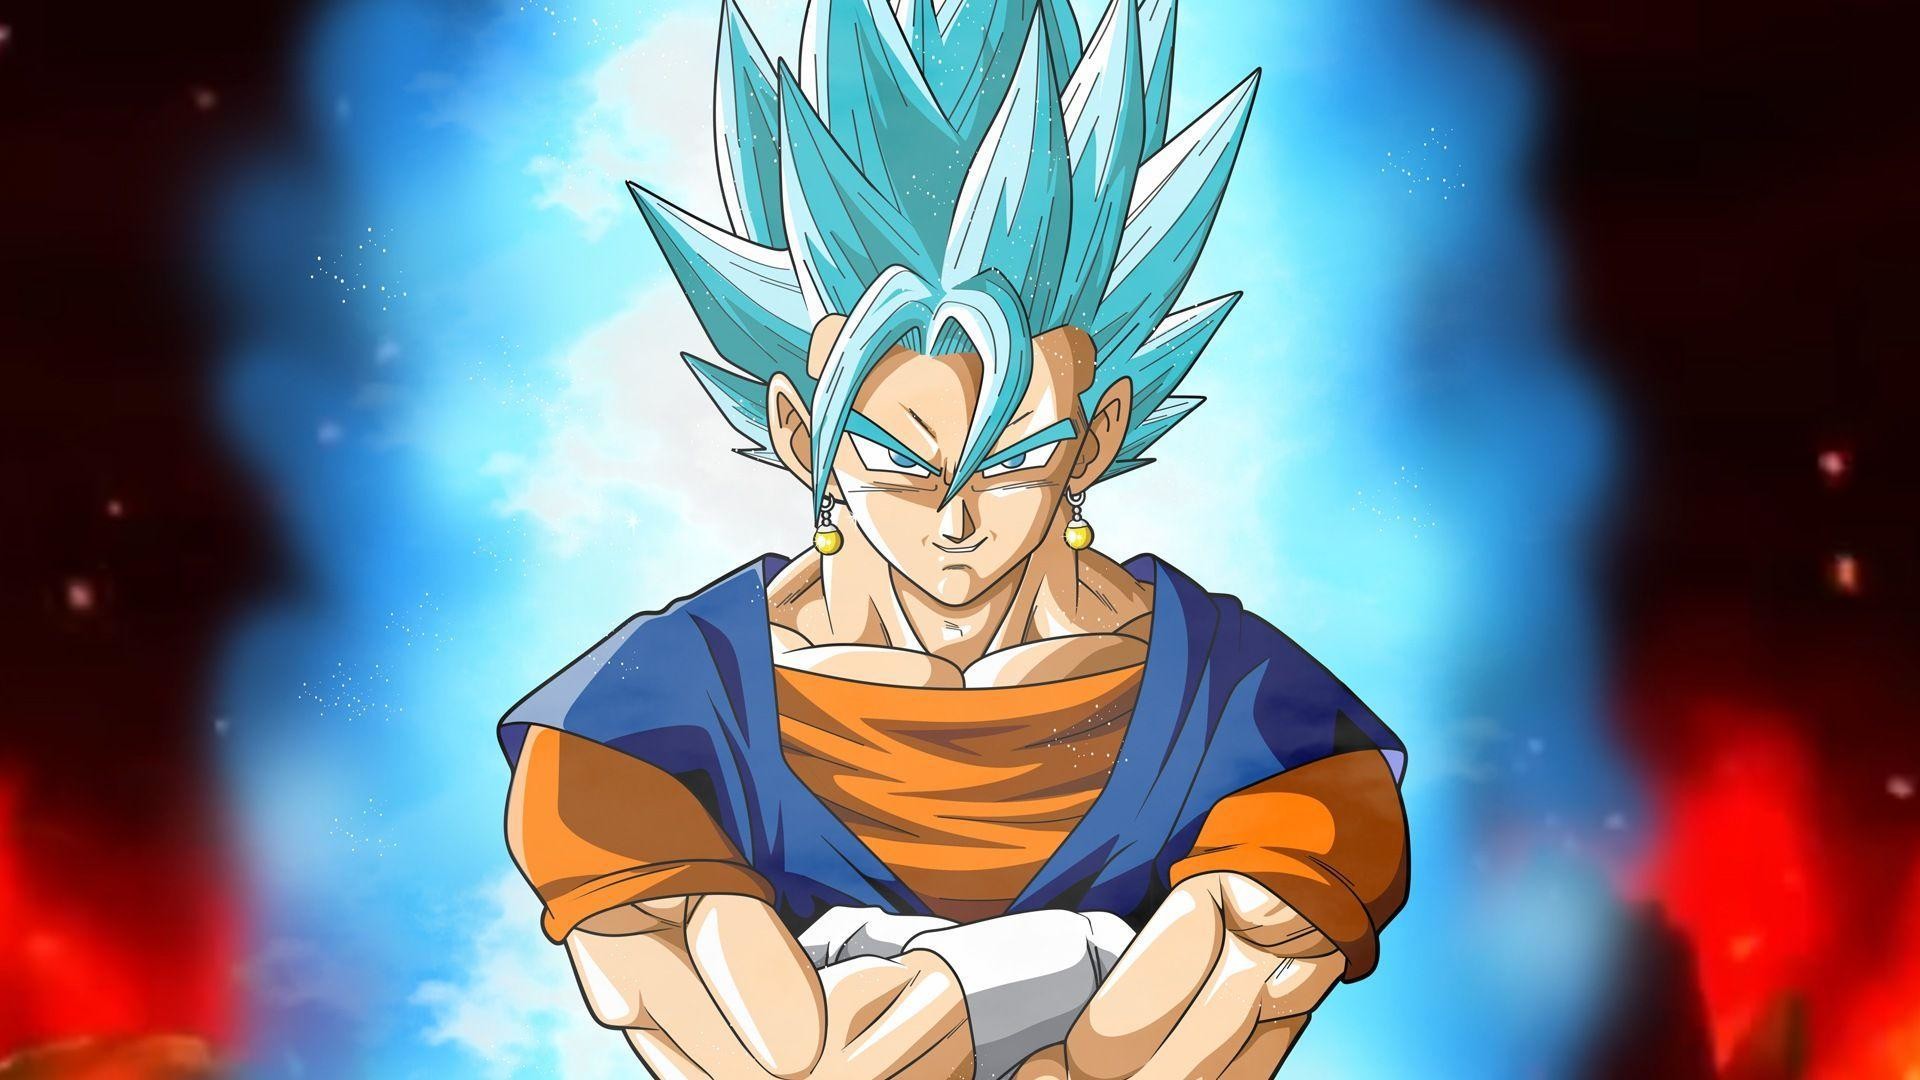 Goku Super Saiyan 4 HD Wallpaper Image For Desktop iPhone Android